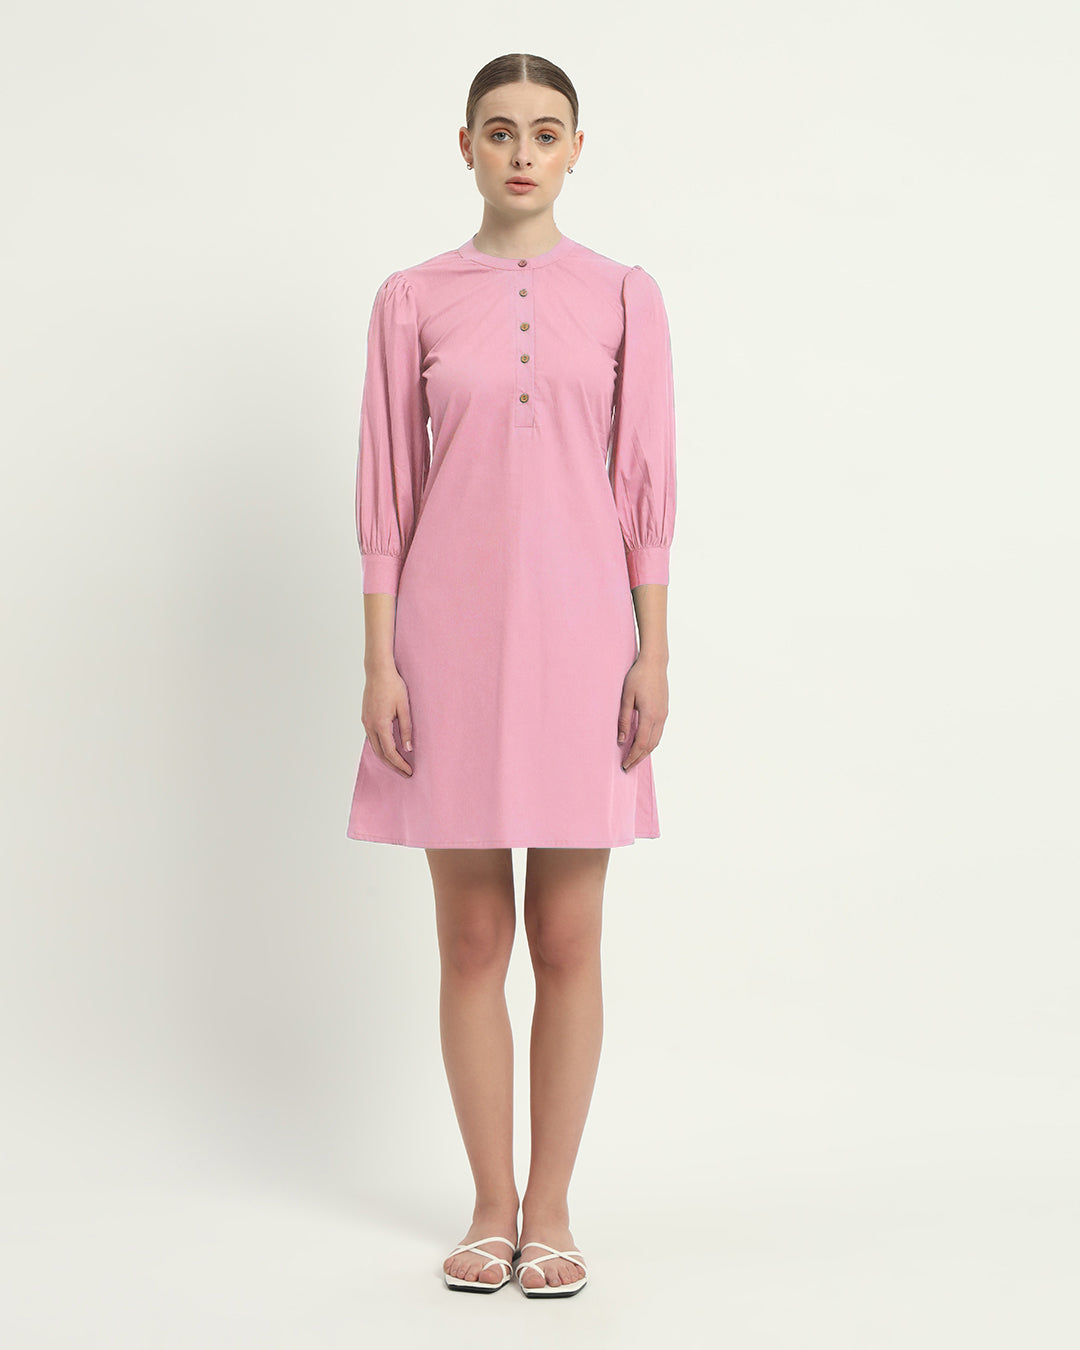 The Fondant Pink Roslyn Cotton Dress